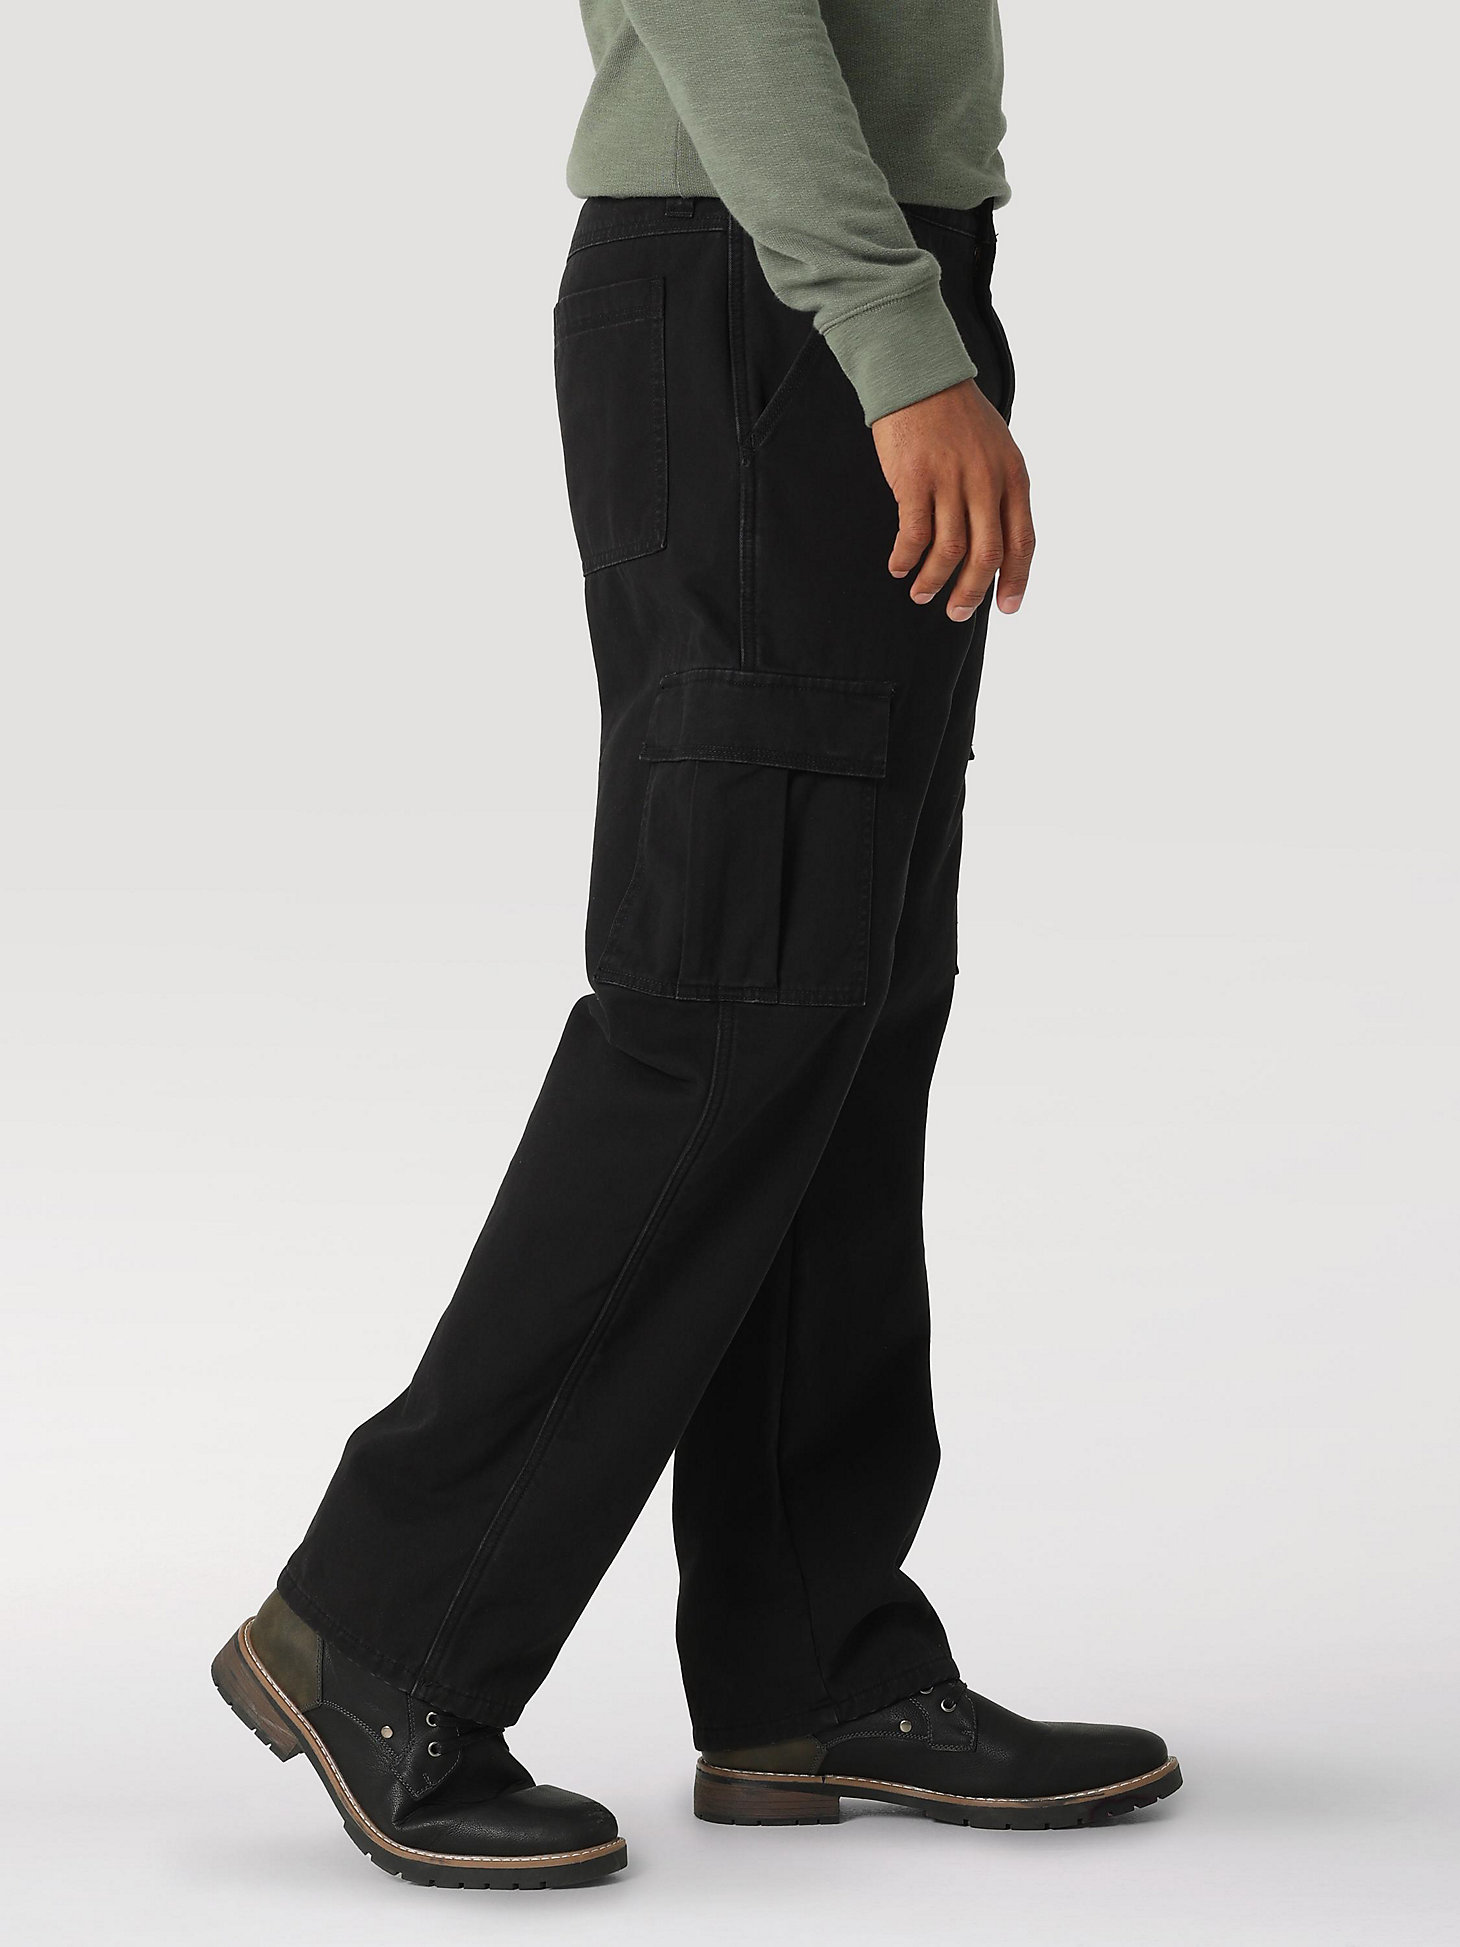 Men's Fleece Lined Cargo Pant in Black alternative view 1